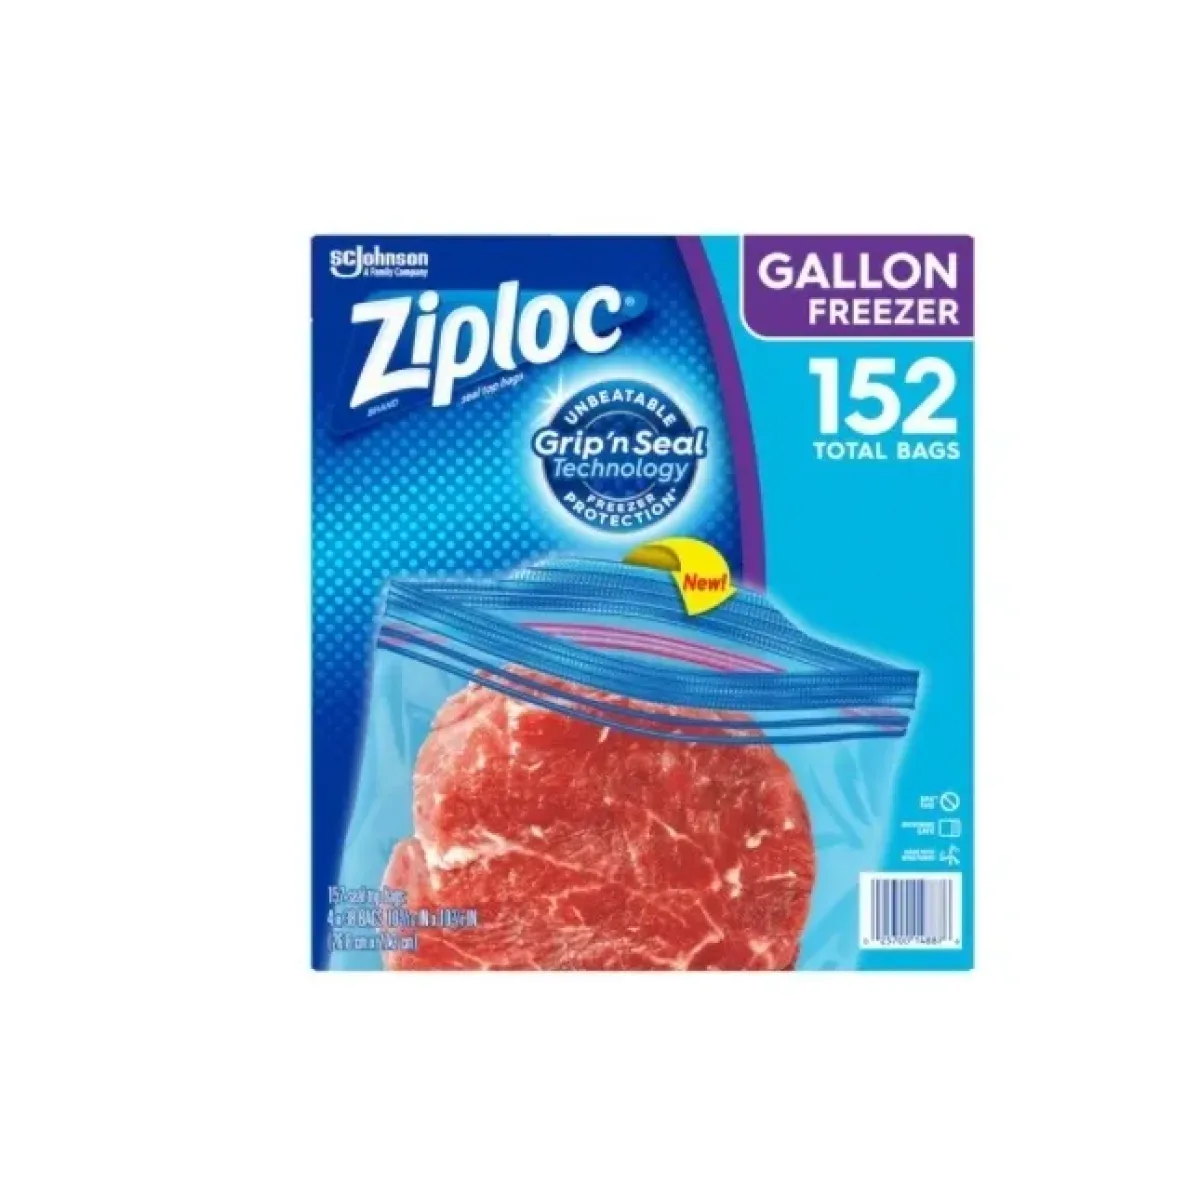 Ziploc Bags, Gallon Freezer (Purchase) 2